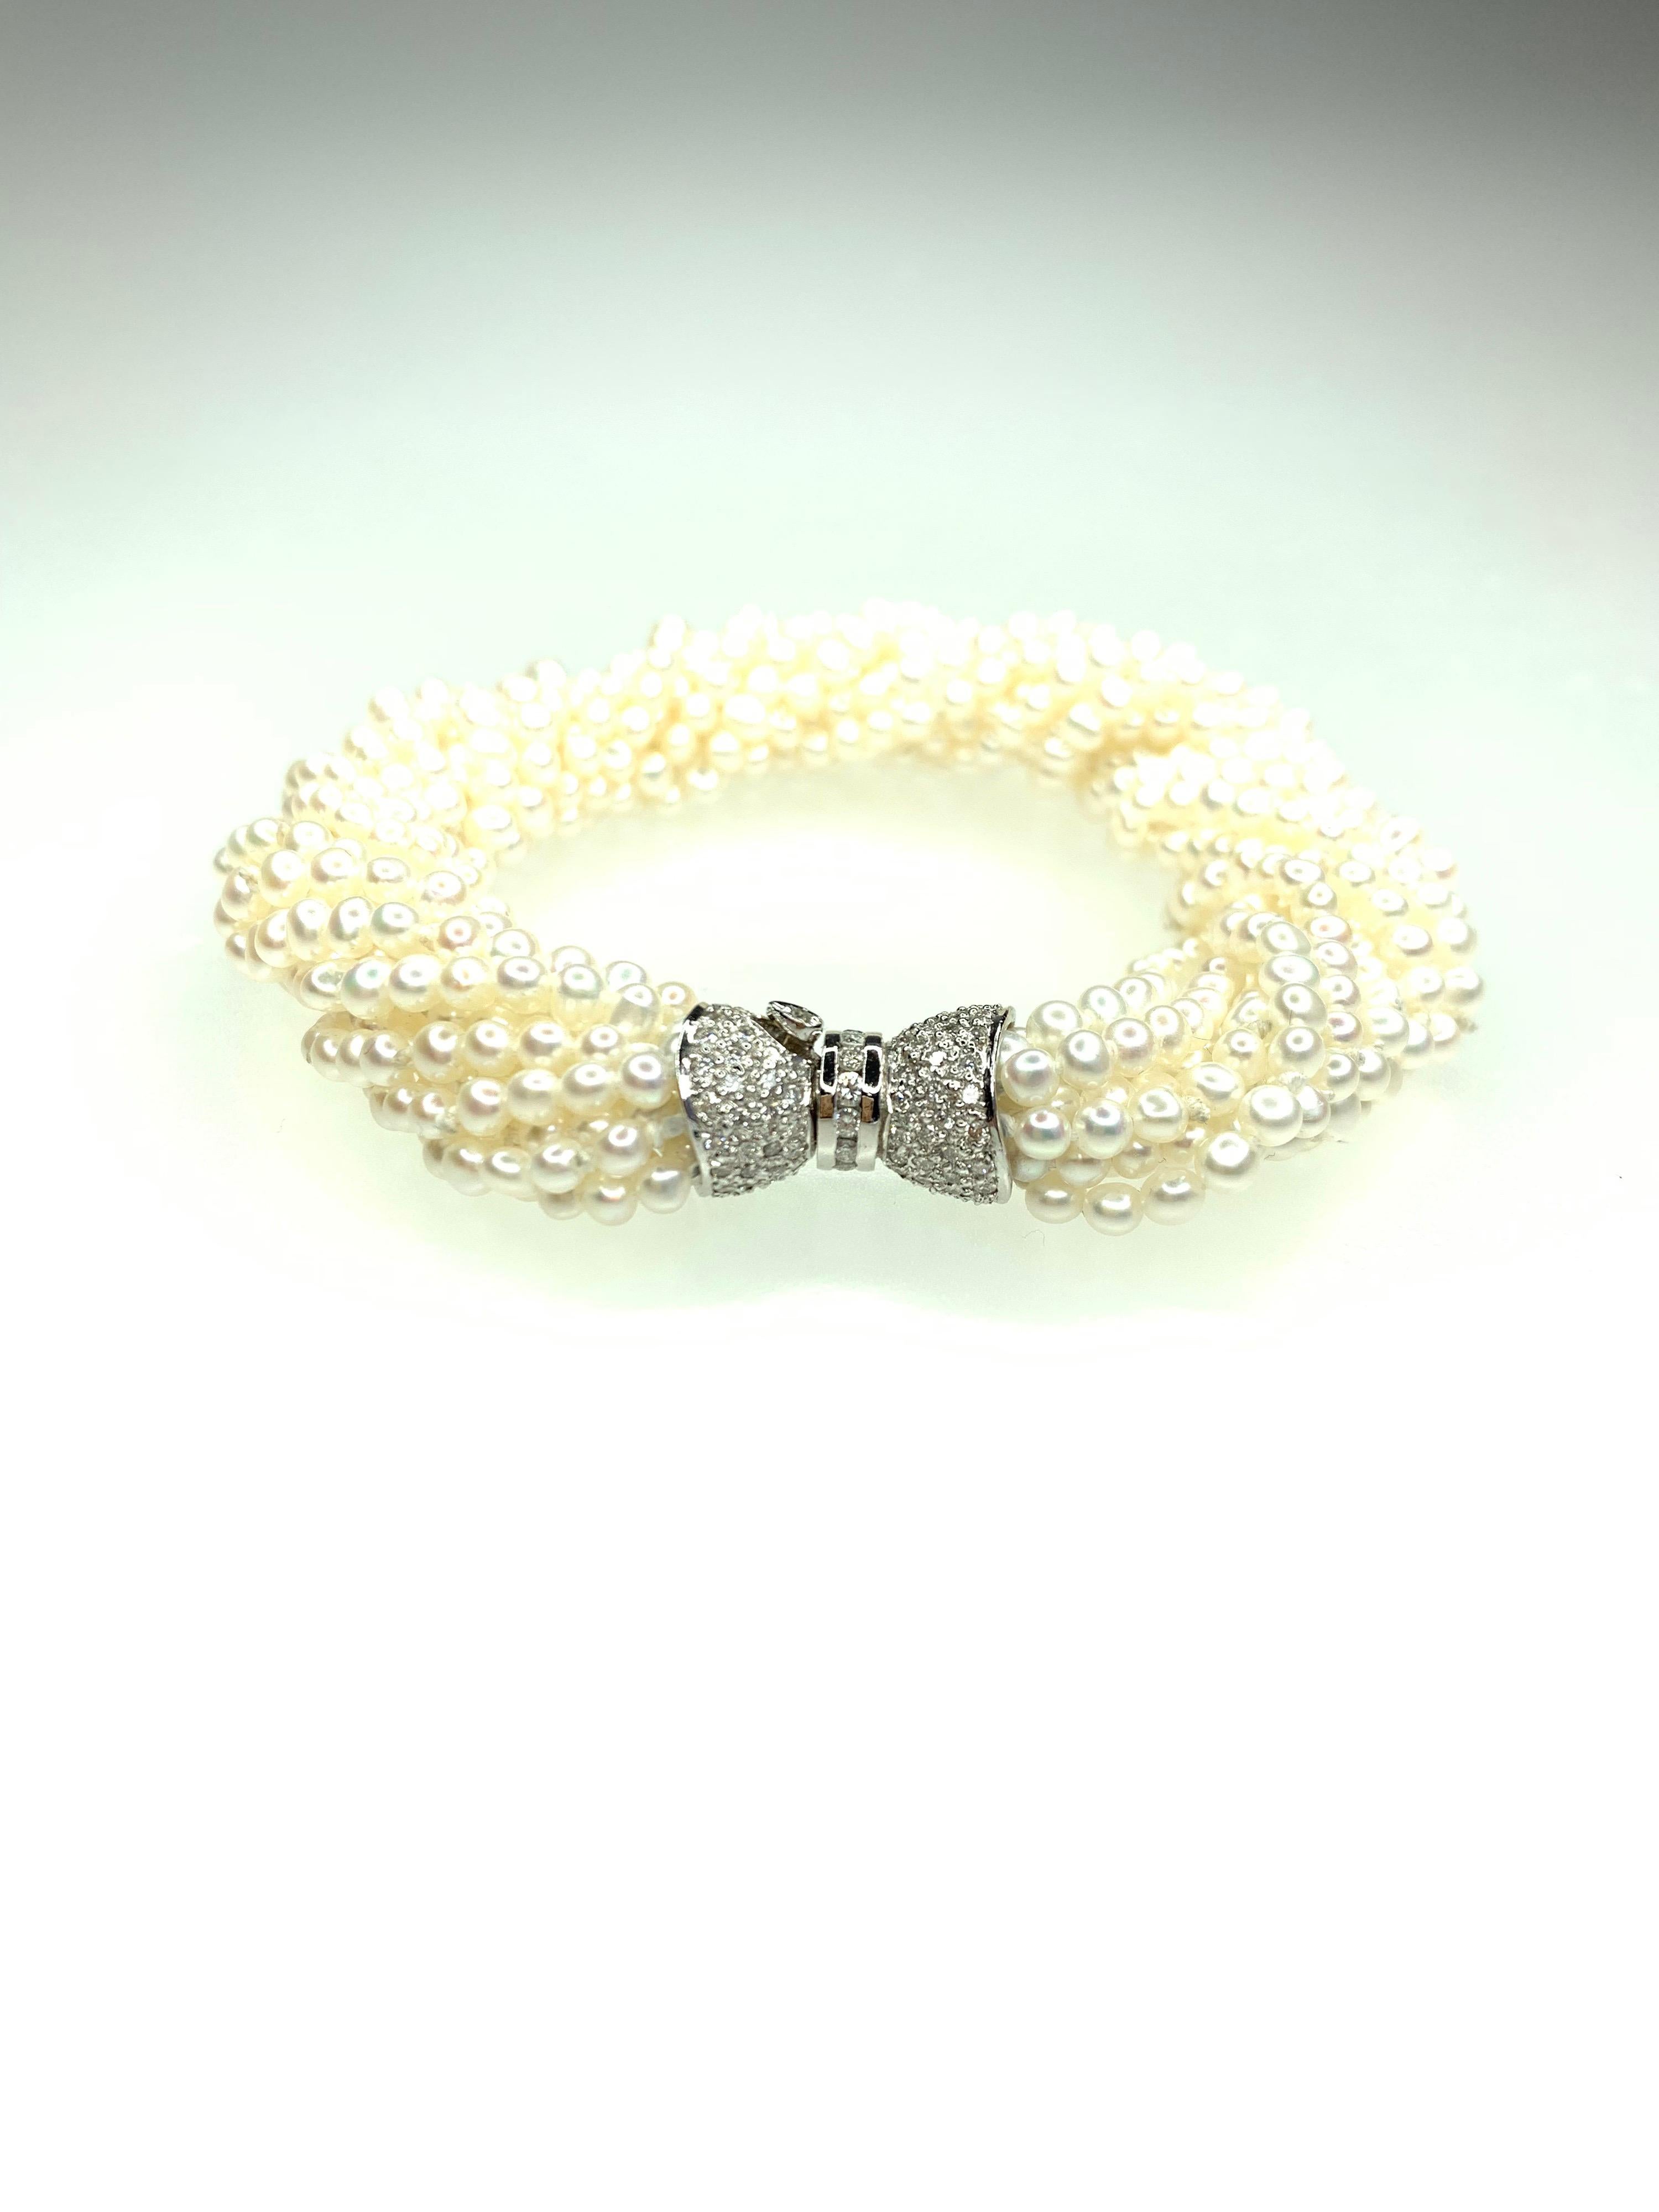 Cultured Pearl and Diamond Bracelet 18k  est. Diamonds 1.0ct H-I/Si.
Adjustable to wrist